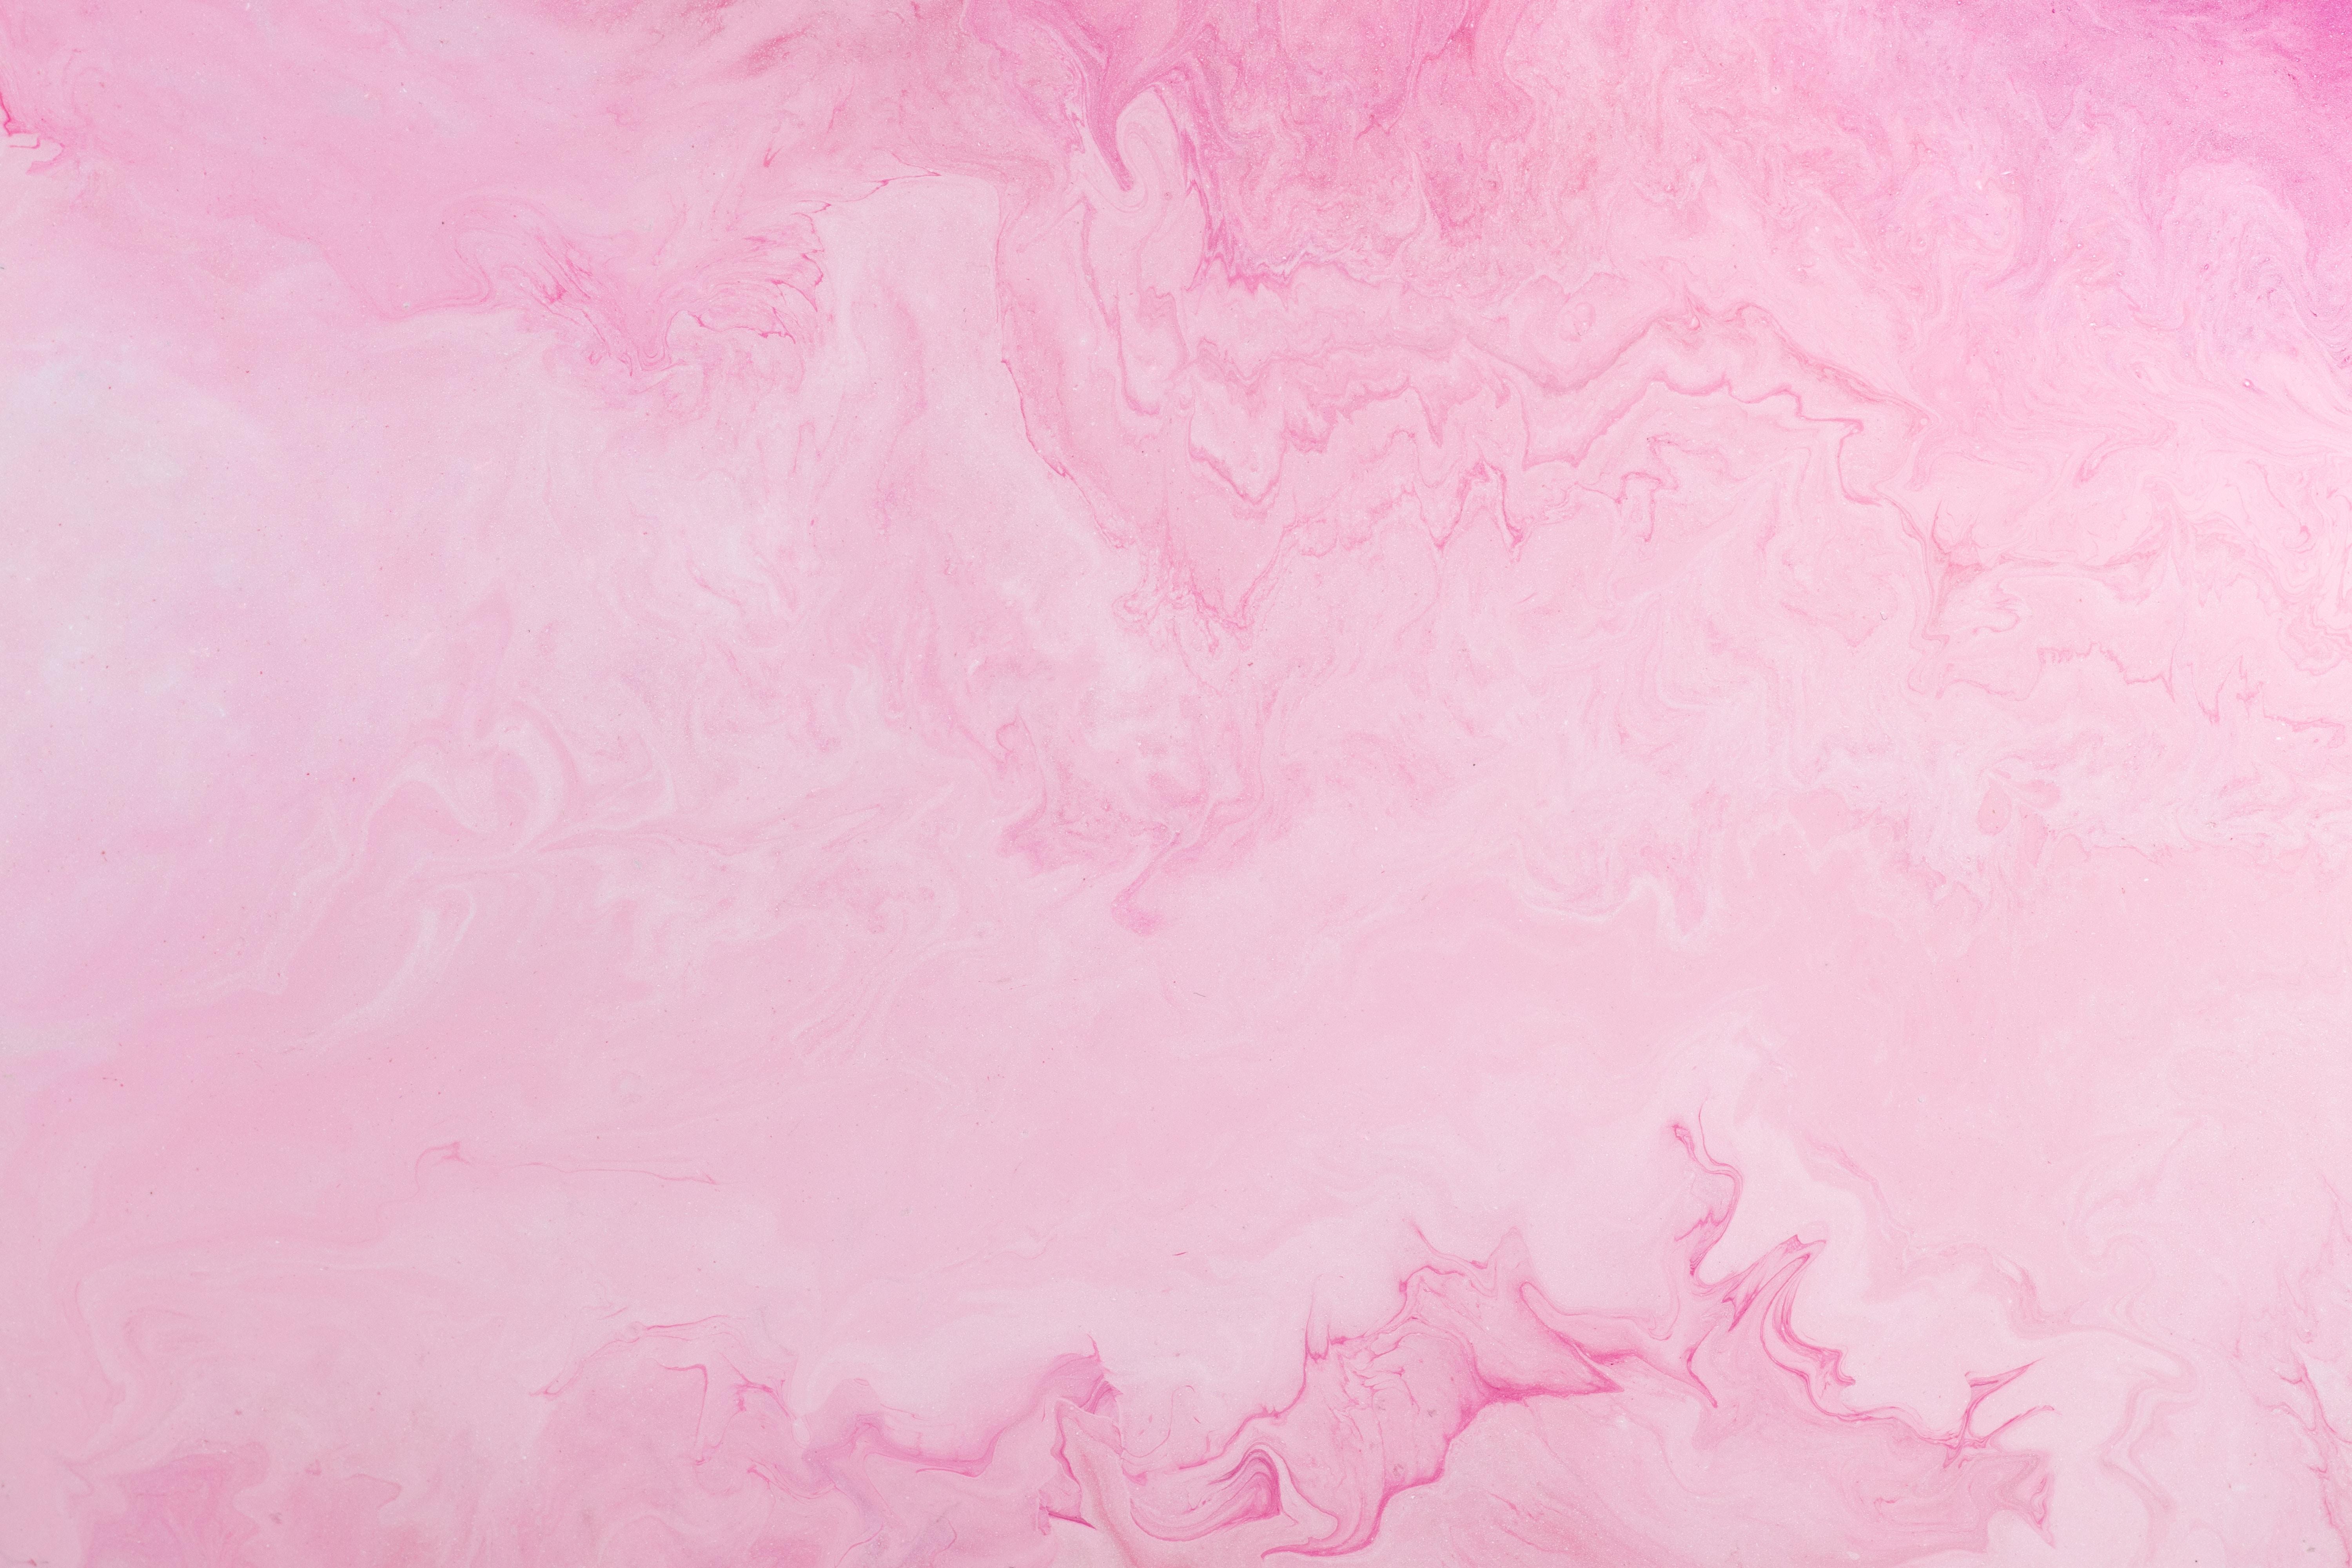 Pastel Pink Desktop Wallpapers - Wallpaper Cave
